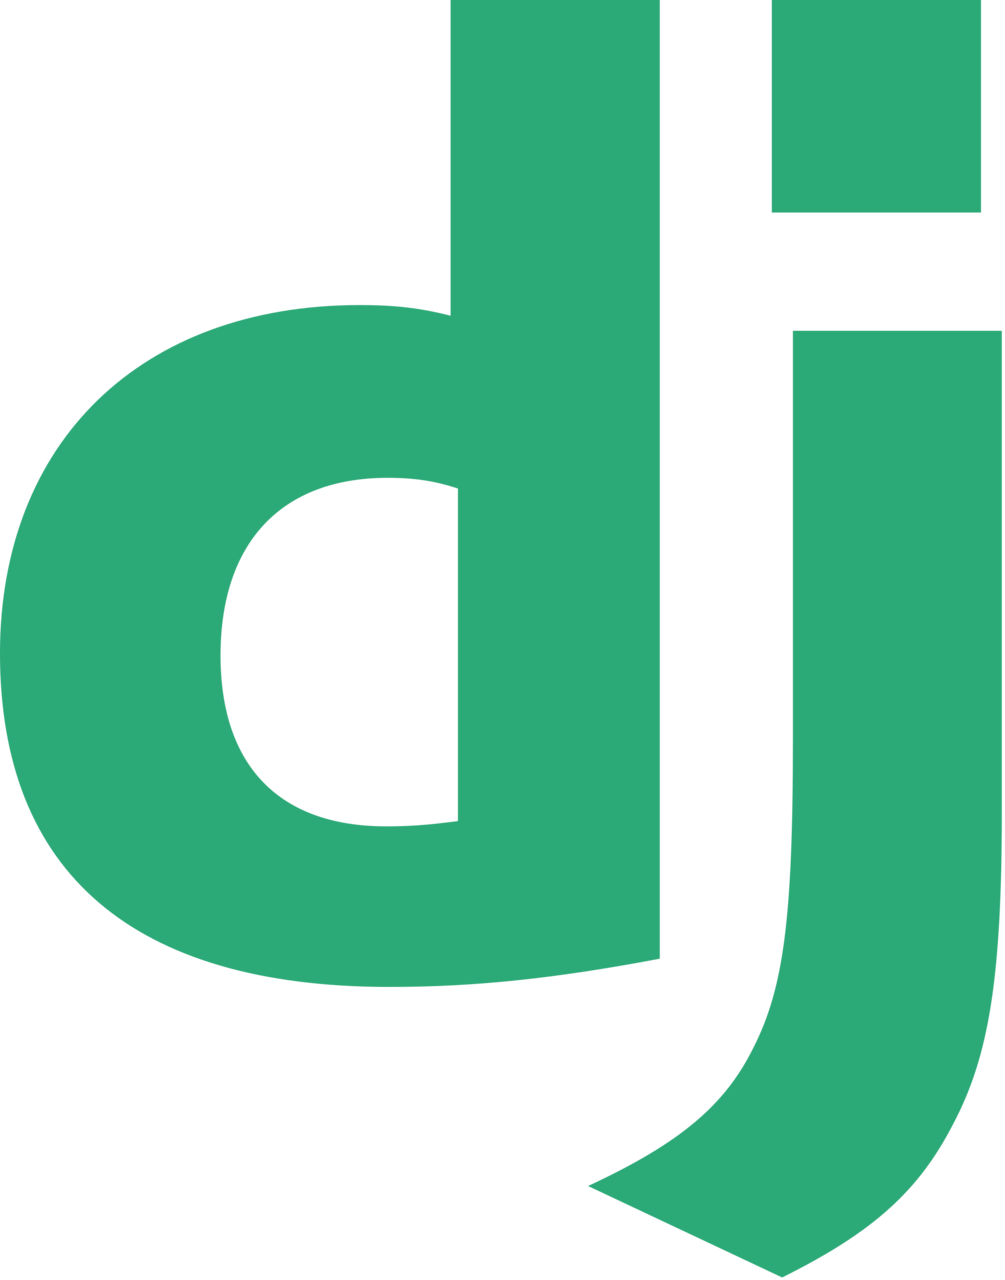 django-logo.png